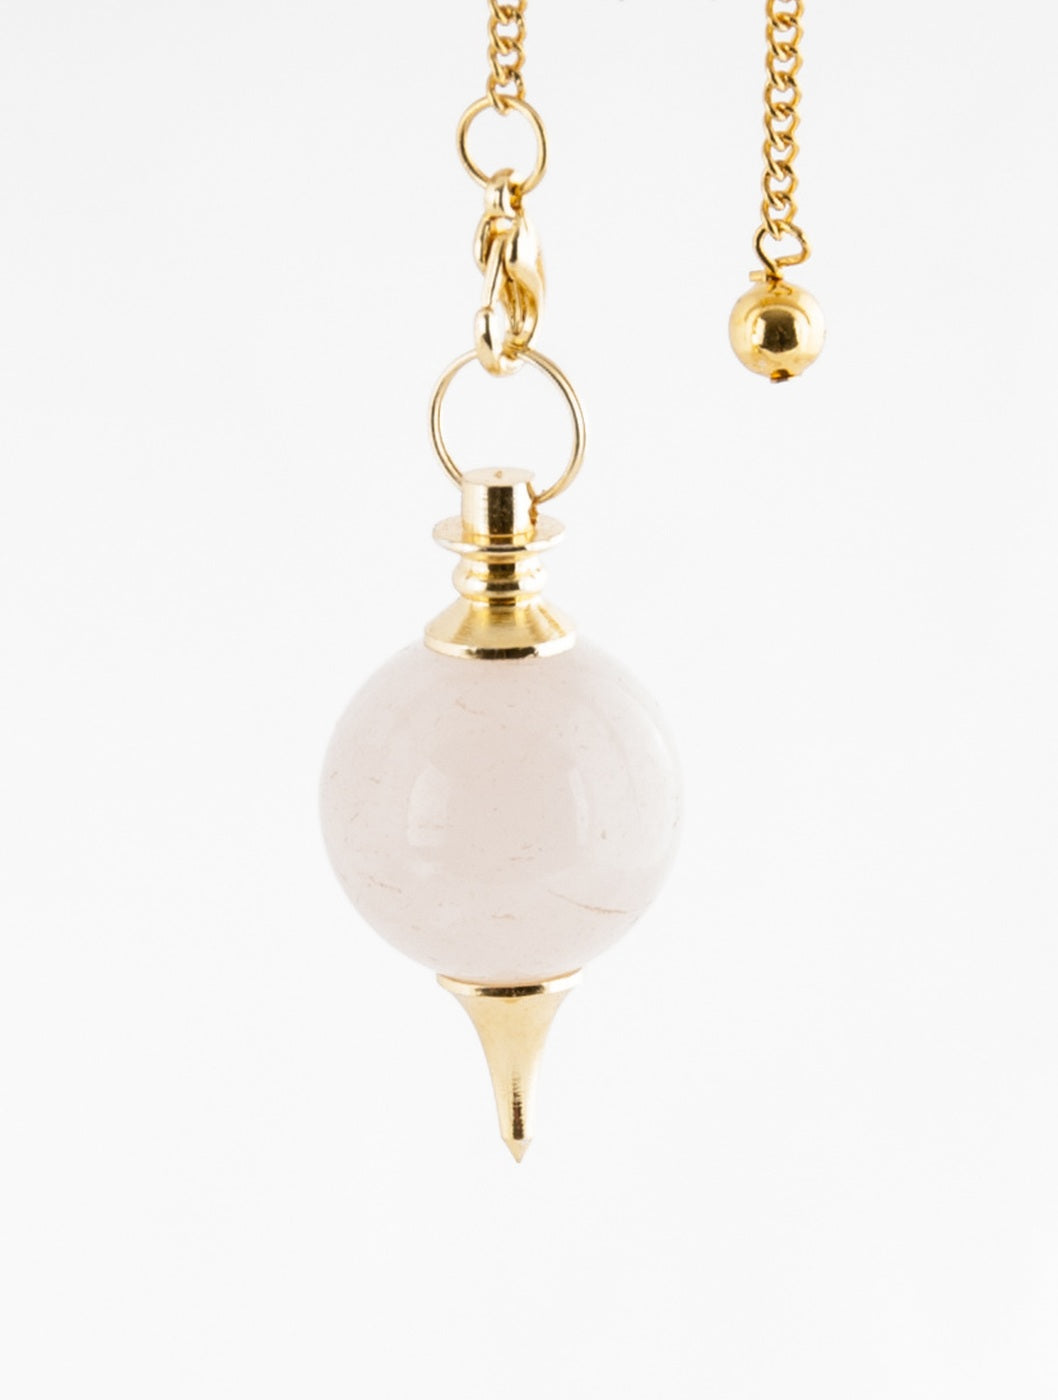 Pendulum with Crystal ball